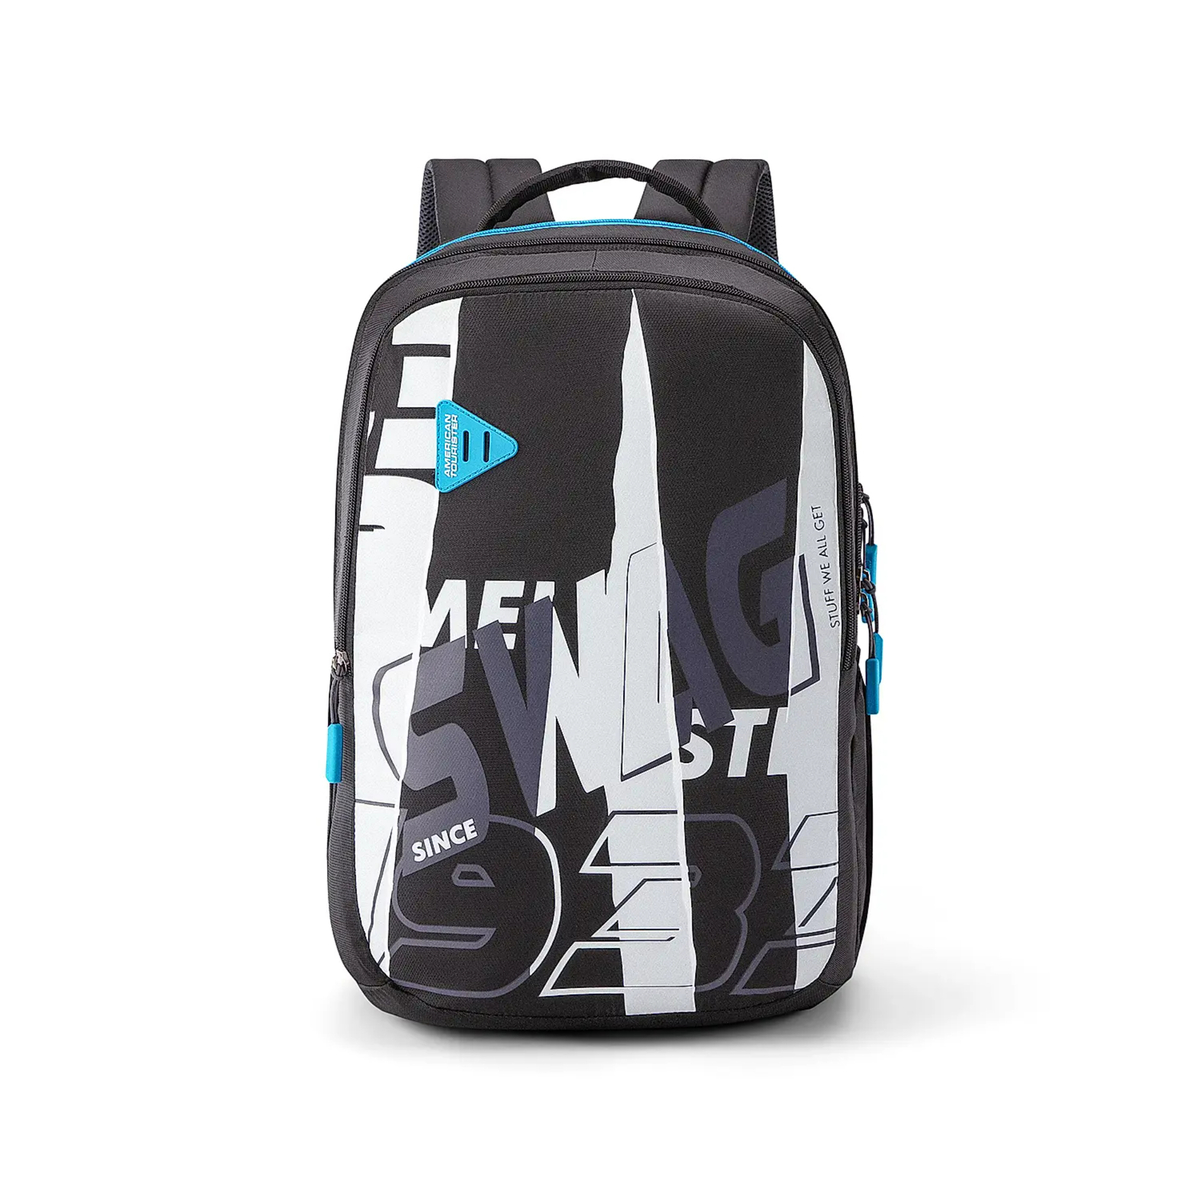 American Tourister Quad + School Backpack, 29 L Volume, Lake Green, GAT104